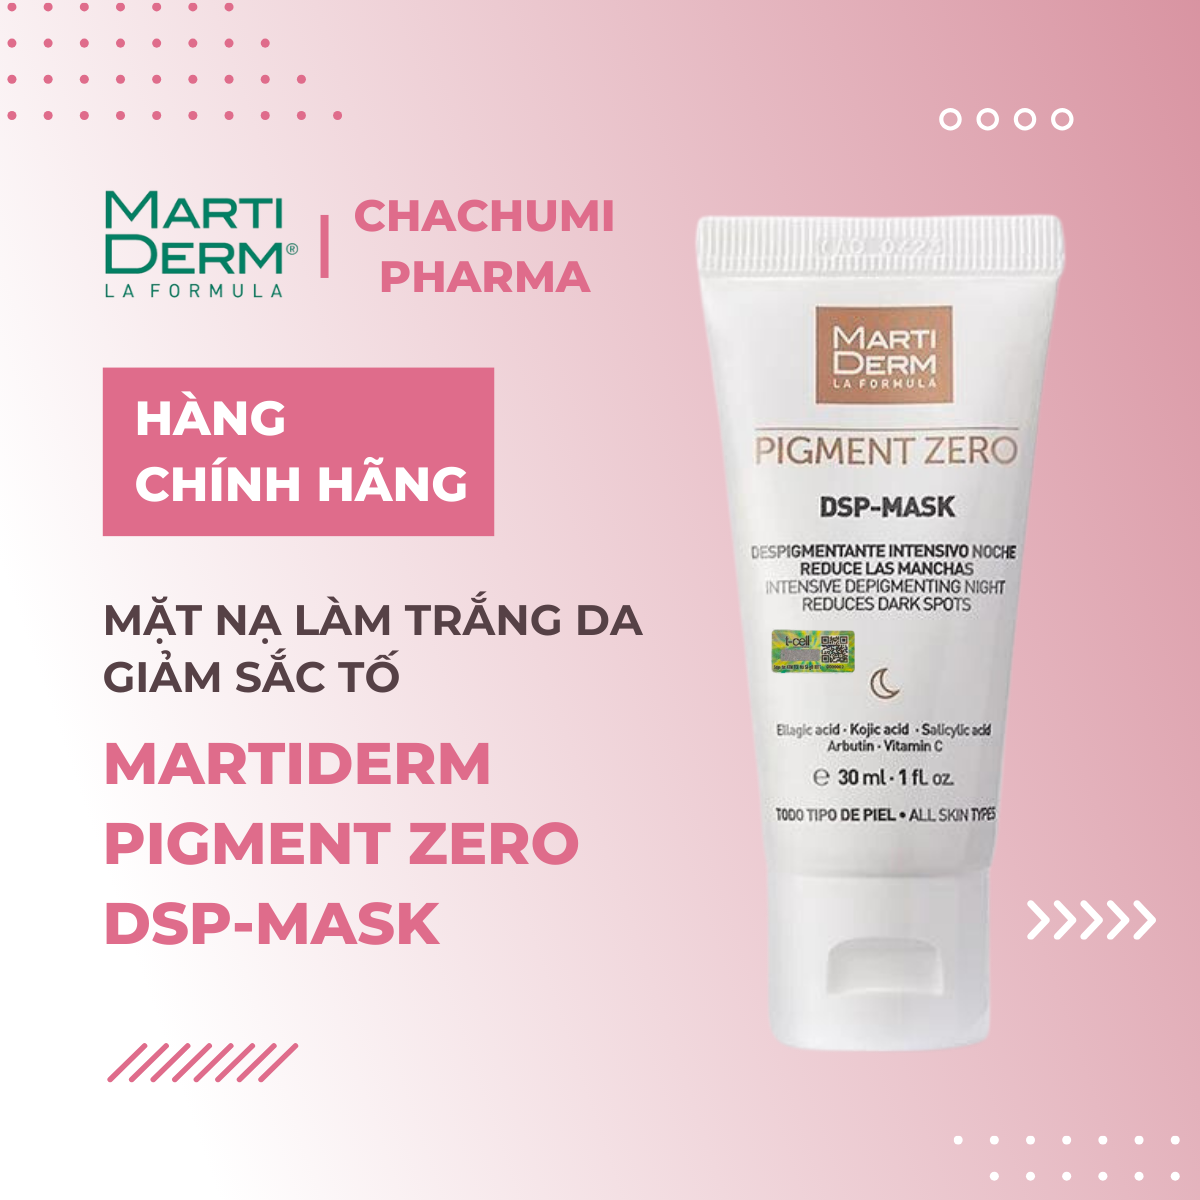 Martiderm Pigment Zero DSP Mask 30ml - Mặt Nạ Làm Trắng Da Giảm Sắc Tố